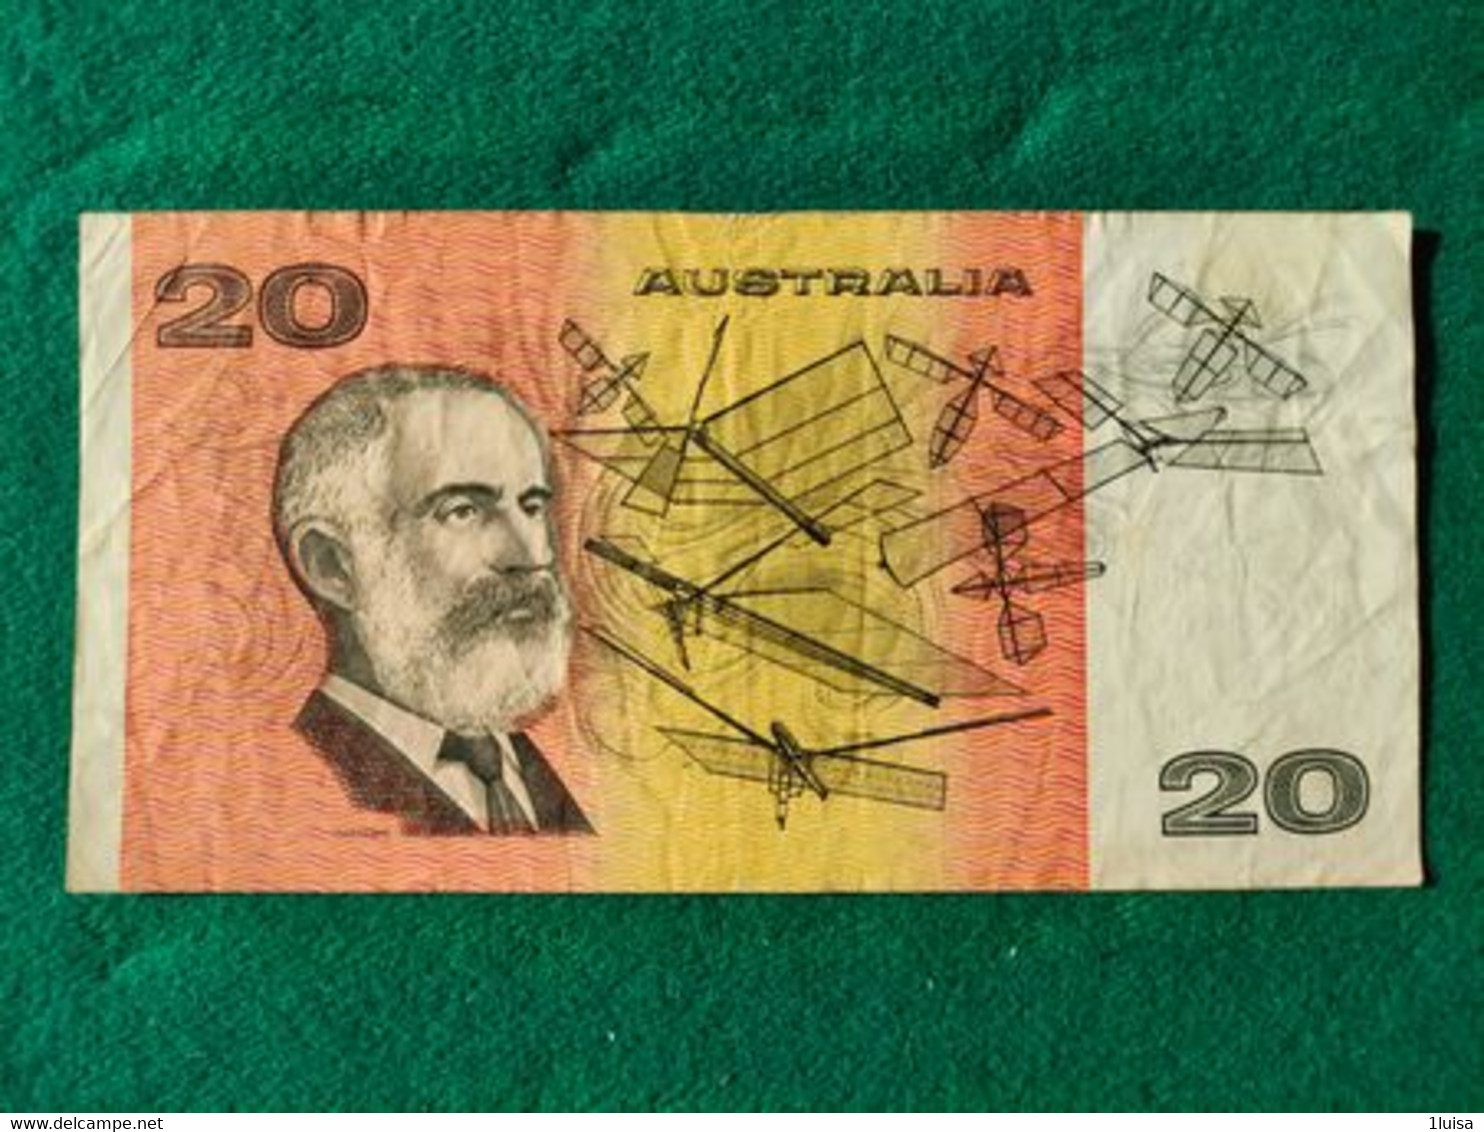 Australia 20 Dollari 1985 - 1988 (10$ Polymer)